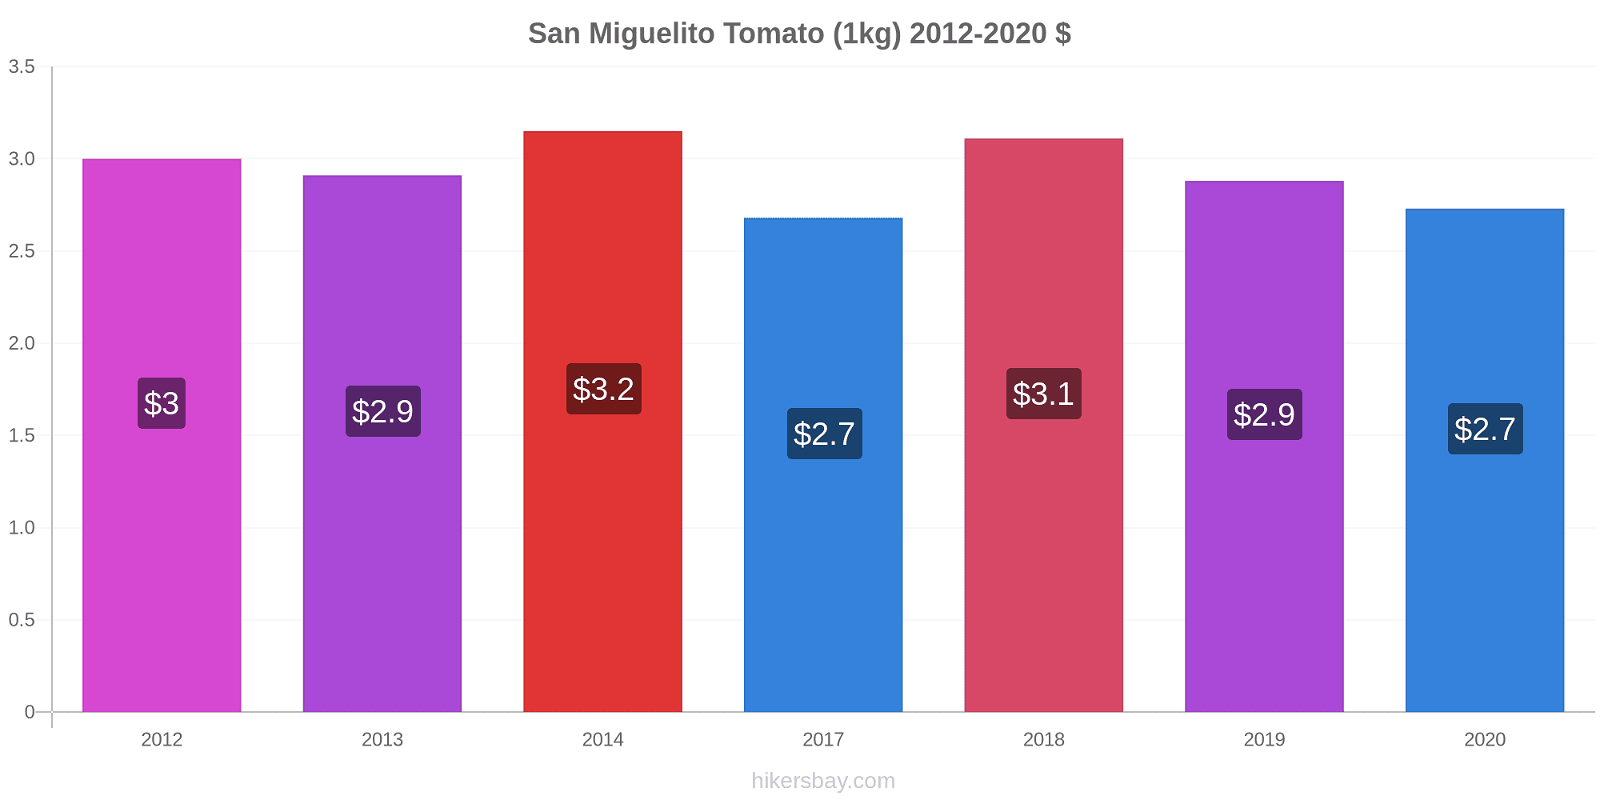 San Miguelito price changes Tomato (1kg) hikersbay.com